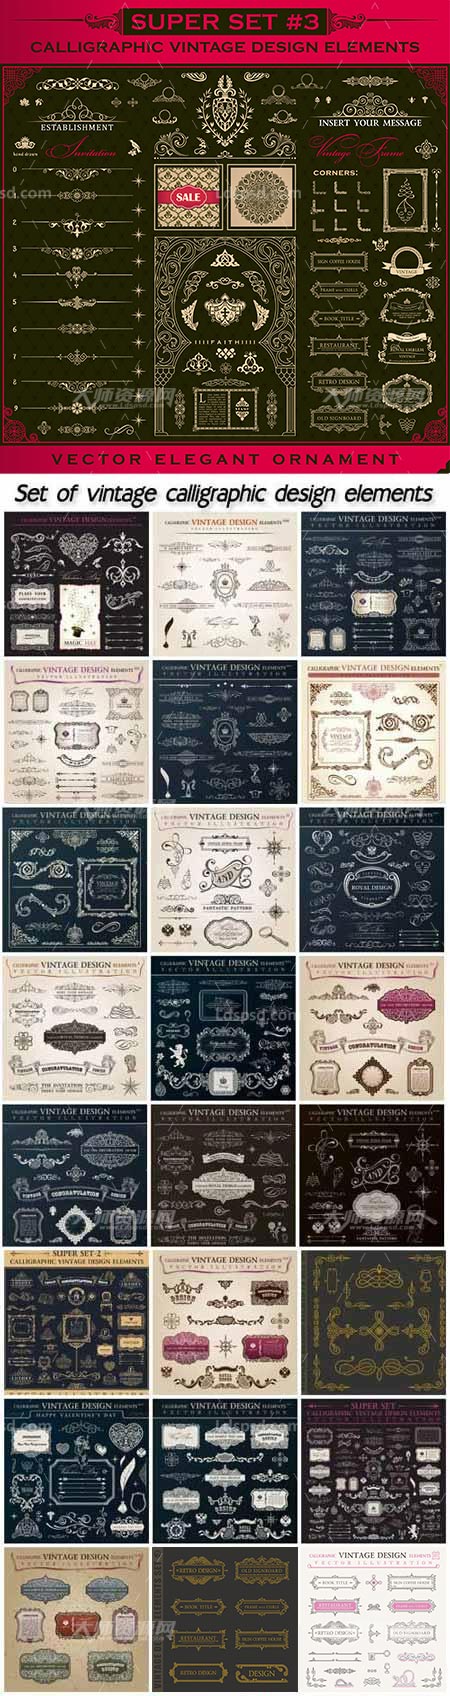 Set of vintage calligraphic design elements in vector,25套精美的矢量复古花纹/边框素材